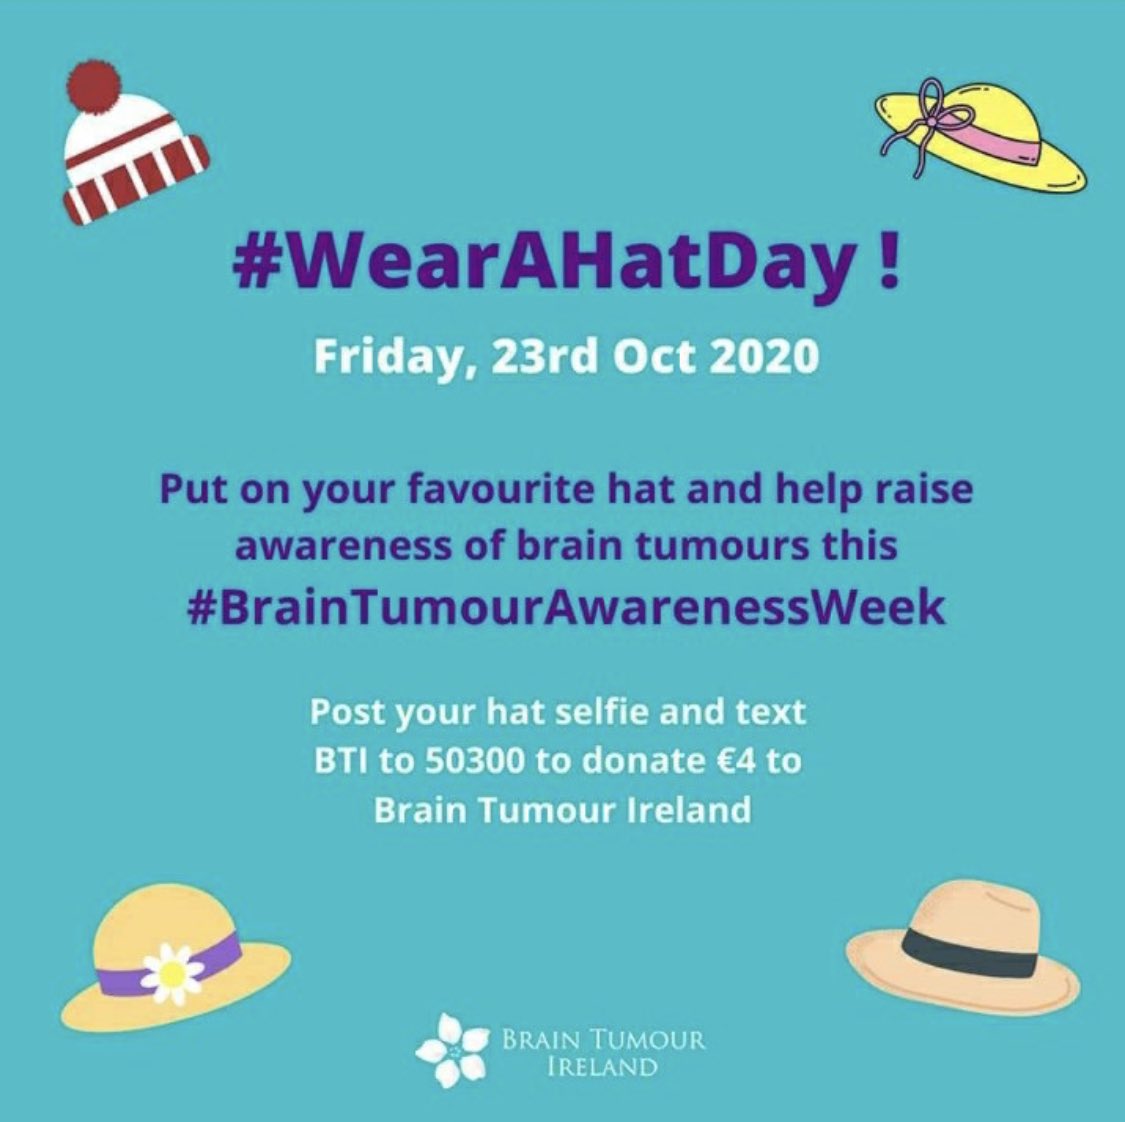 Supporting @braintumourIRL @mtmillinery for #WearAHatDay #BrainTumourAwarenessWeek 🎩 @RyanTubridyShow @IrelandAMVMTV @VirginMediaIE